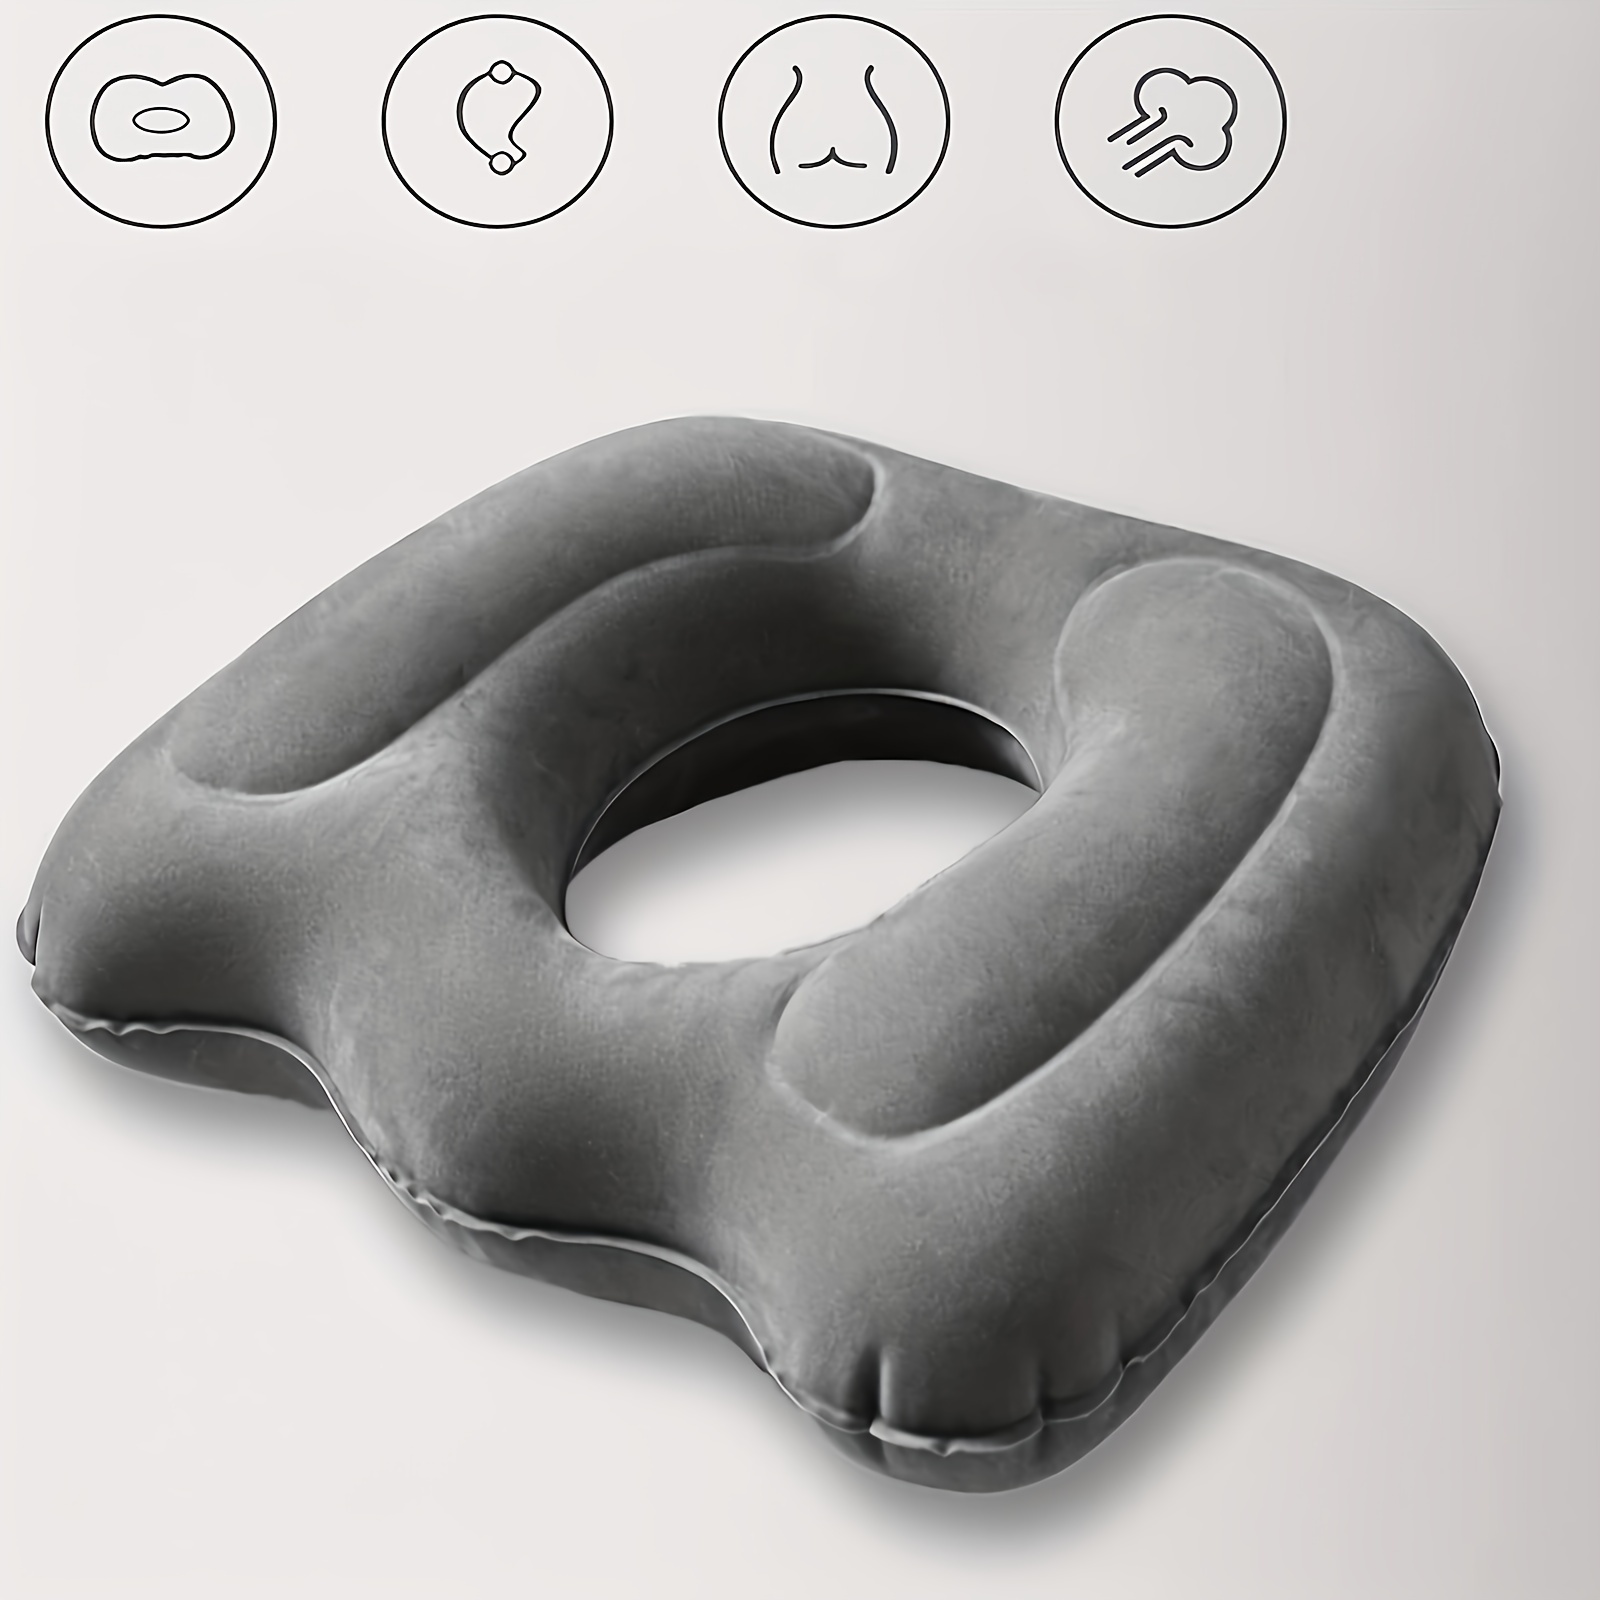 Inflatable Seat Cushion - Travel Seat Cushion for Wheelchair